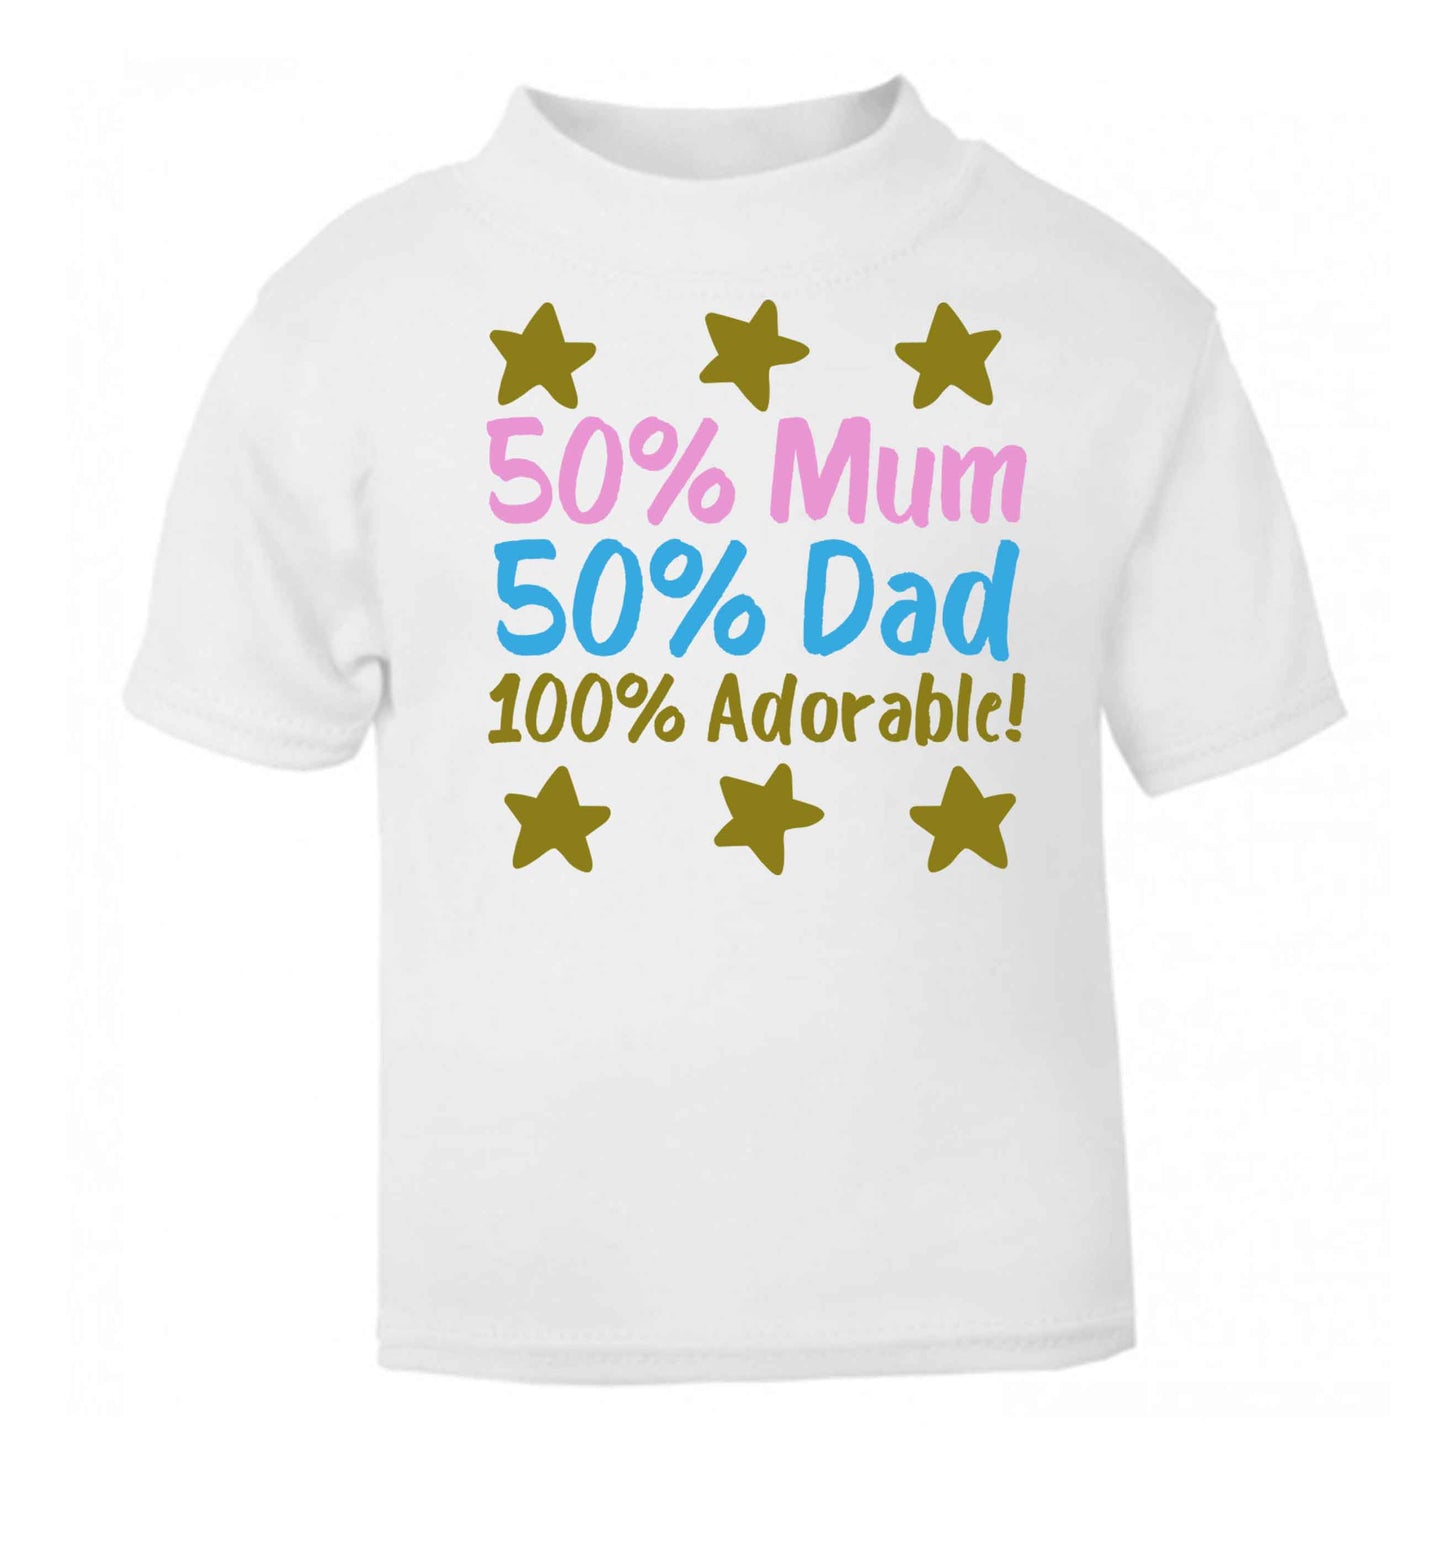 50% mum 50% dad 100% adorable white baby toddler Tshirt 2 Years